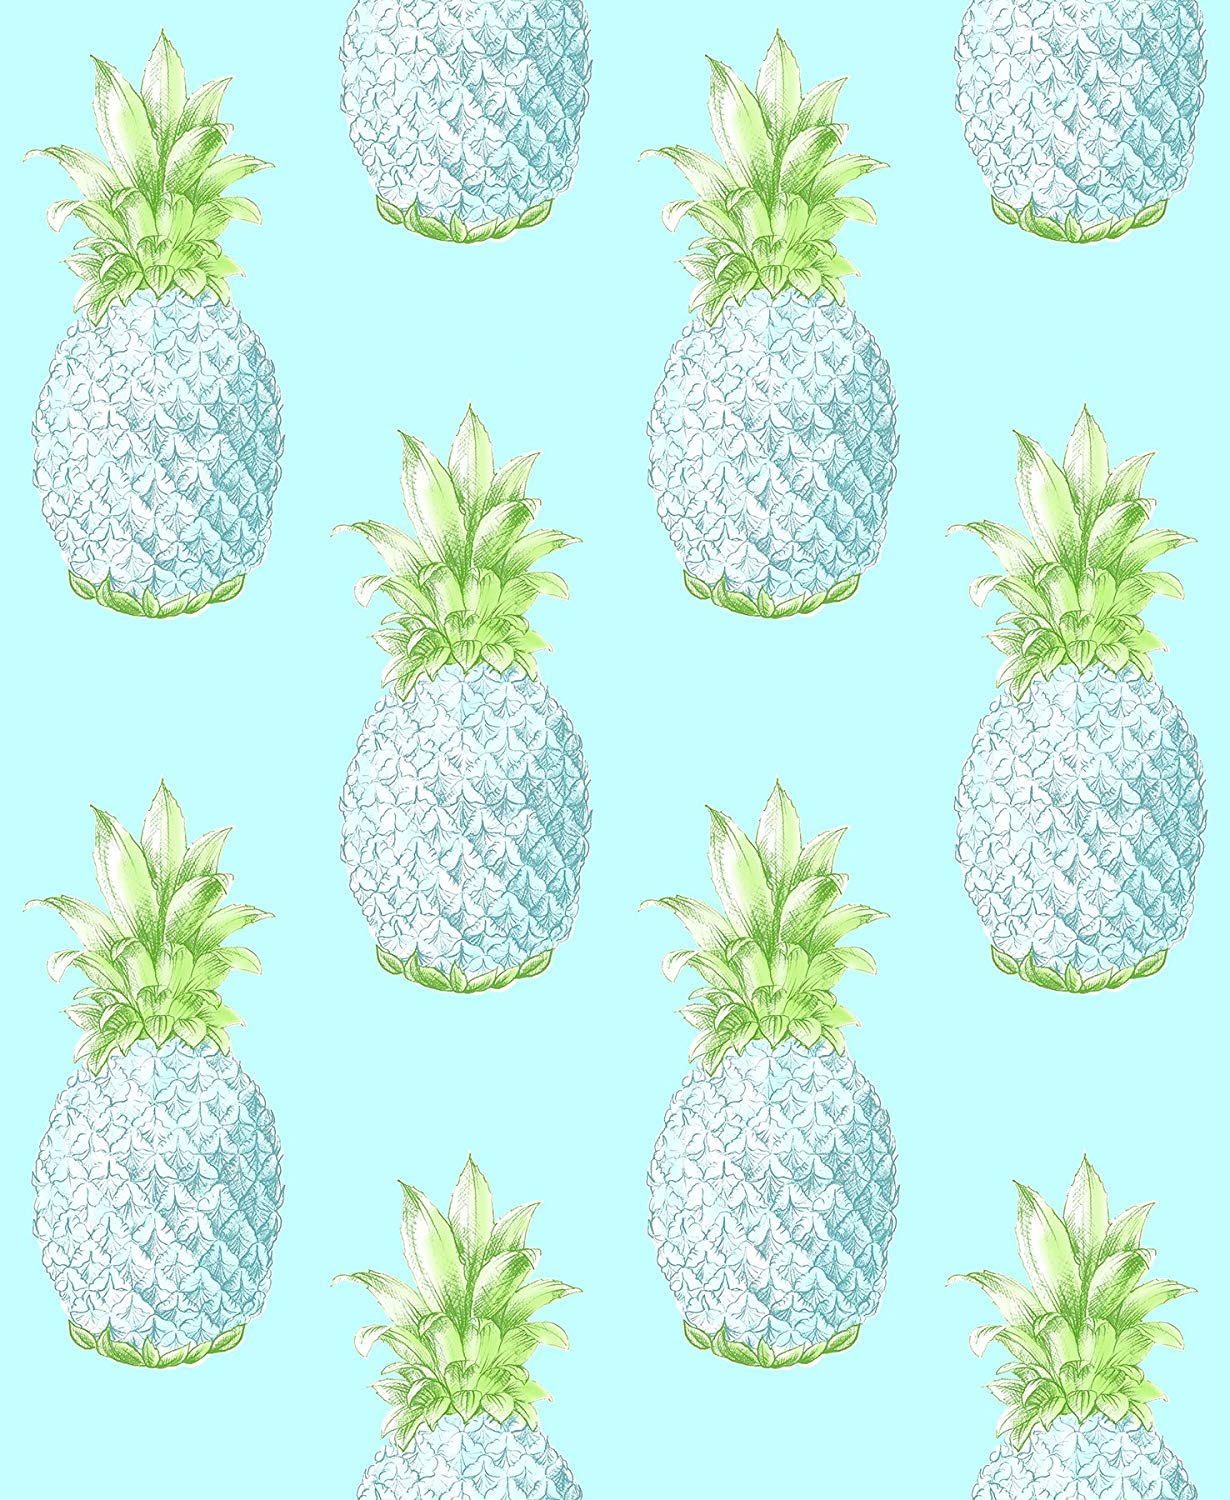 Pineapple - HD Wallpaper 